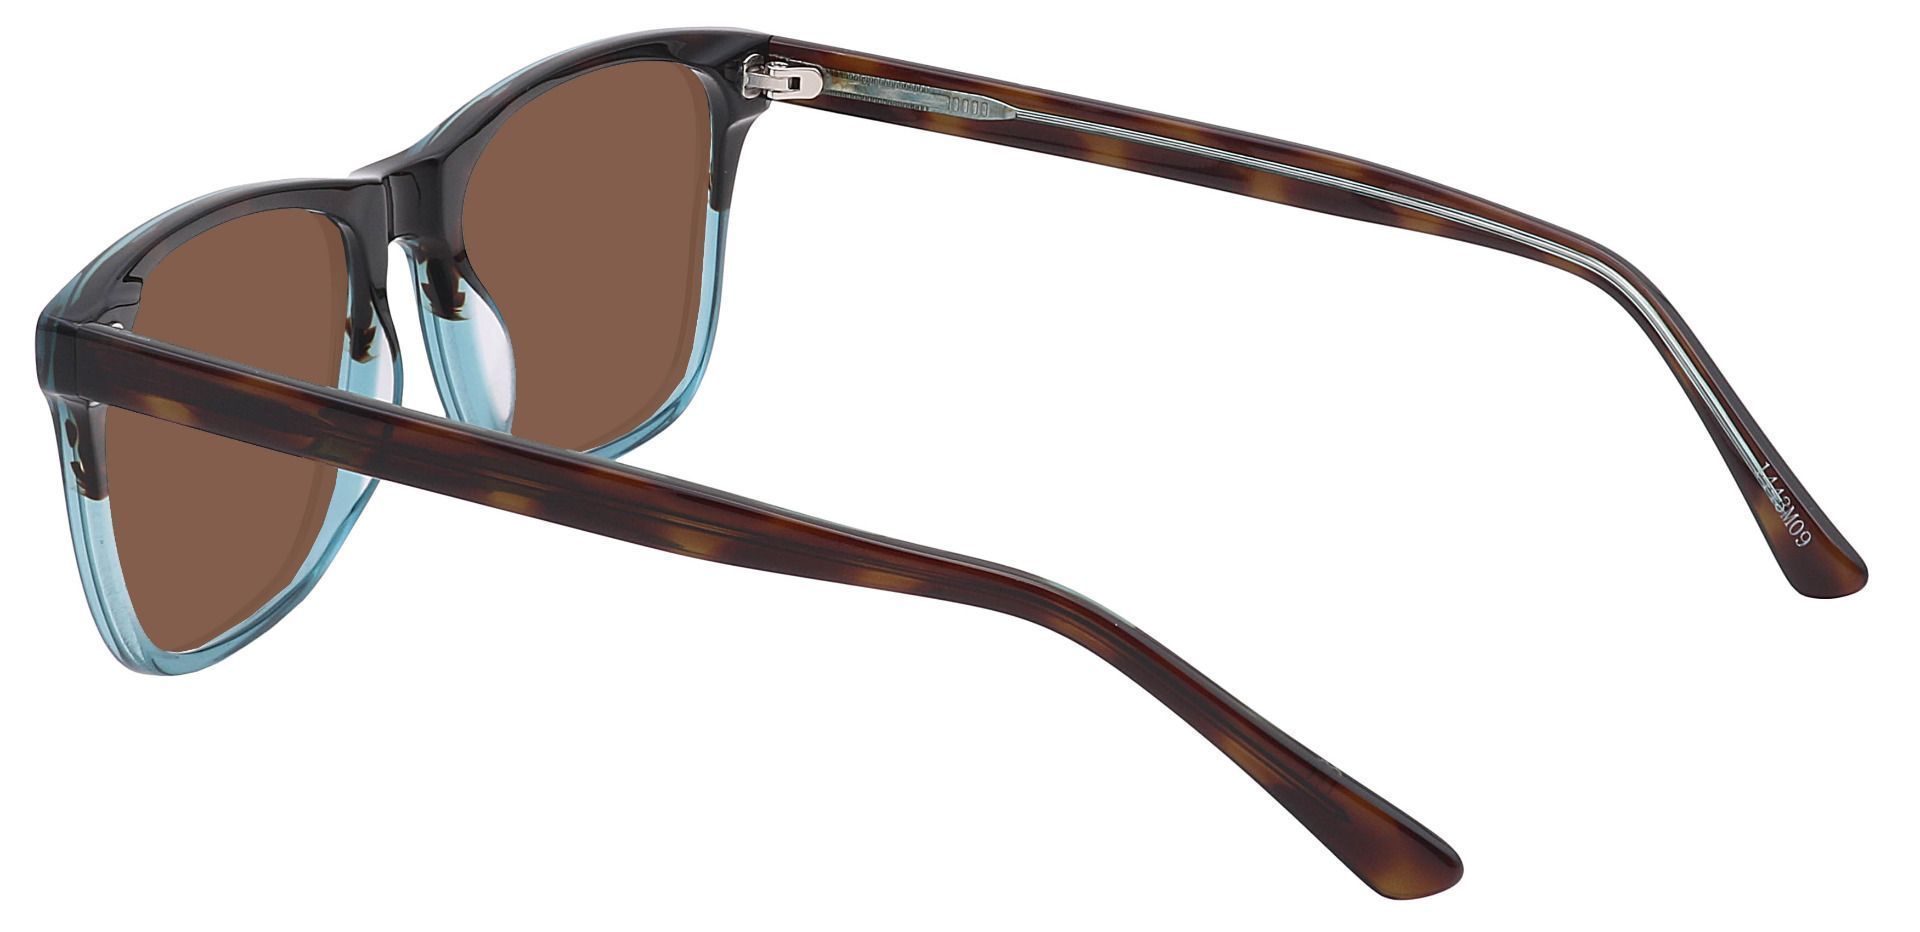 Cantina Square Prescription Sunglasses - Multi Color Frame With Brown Lenses